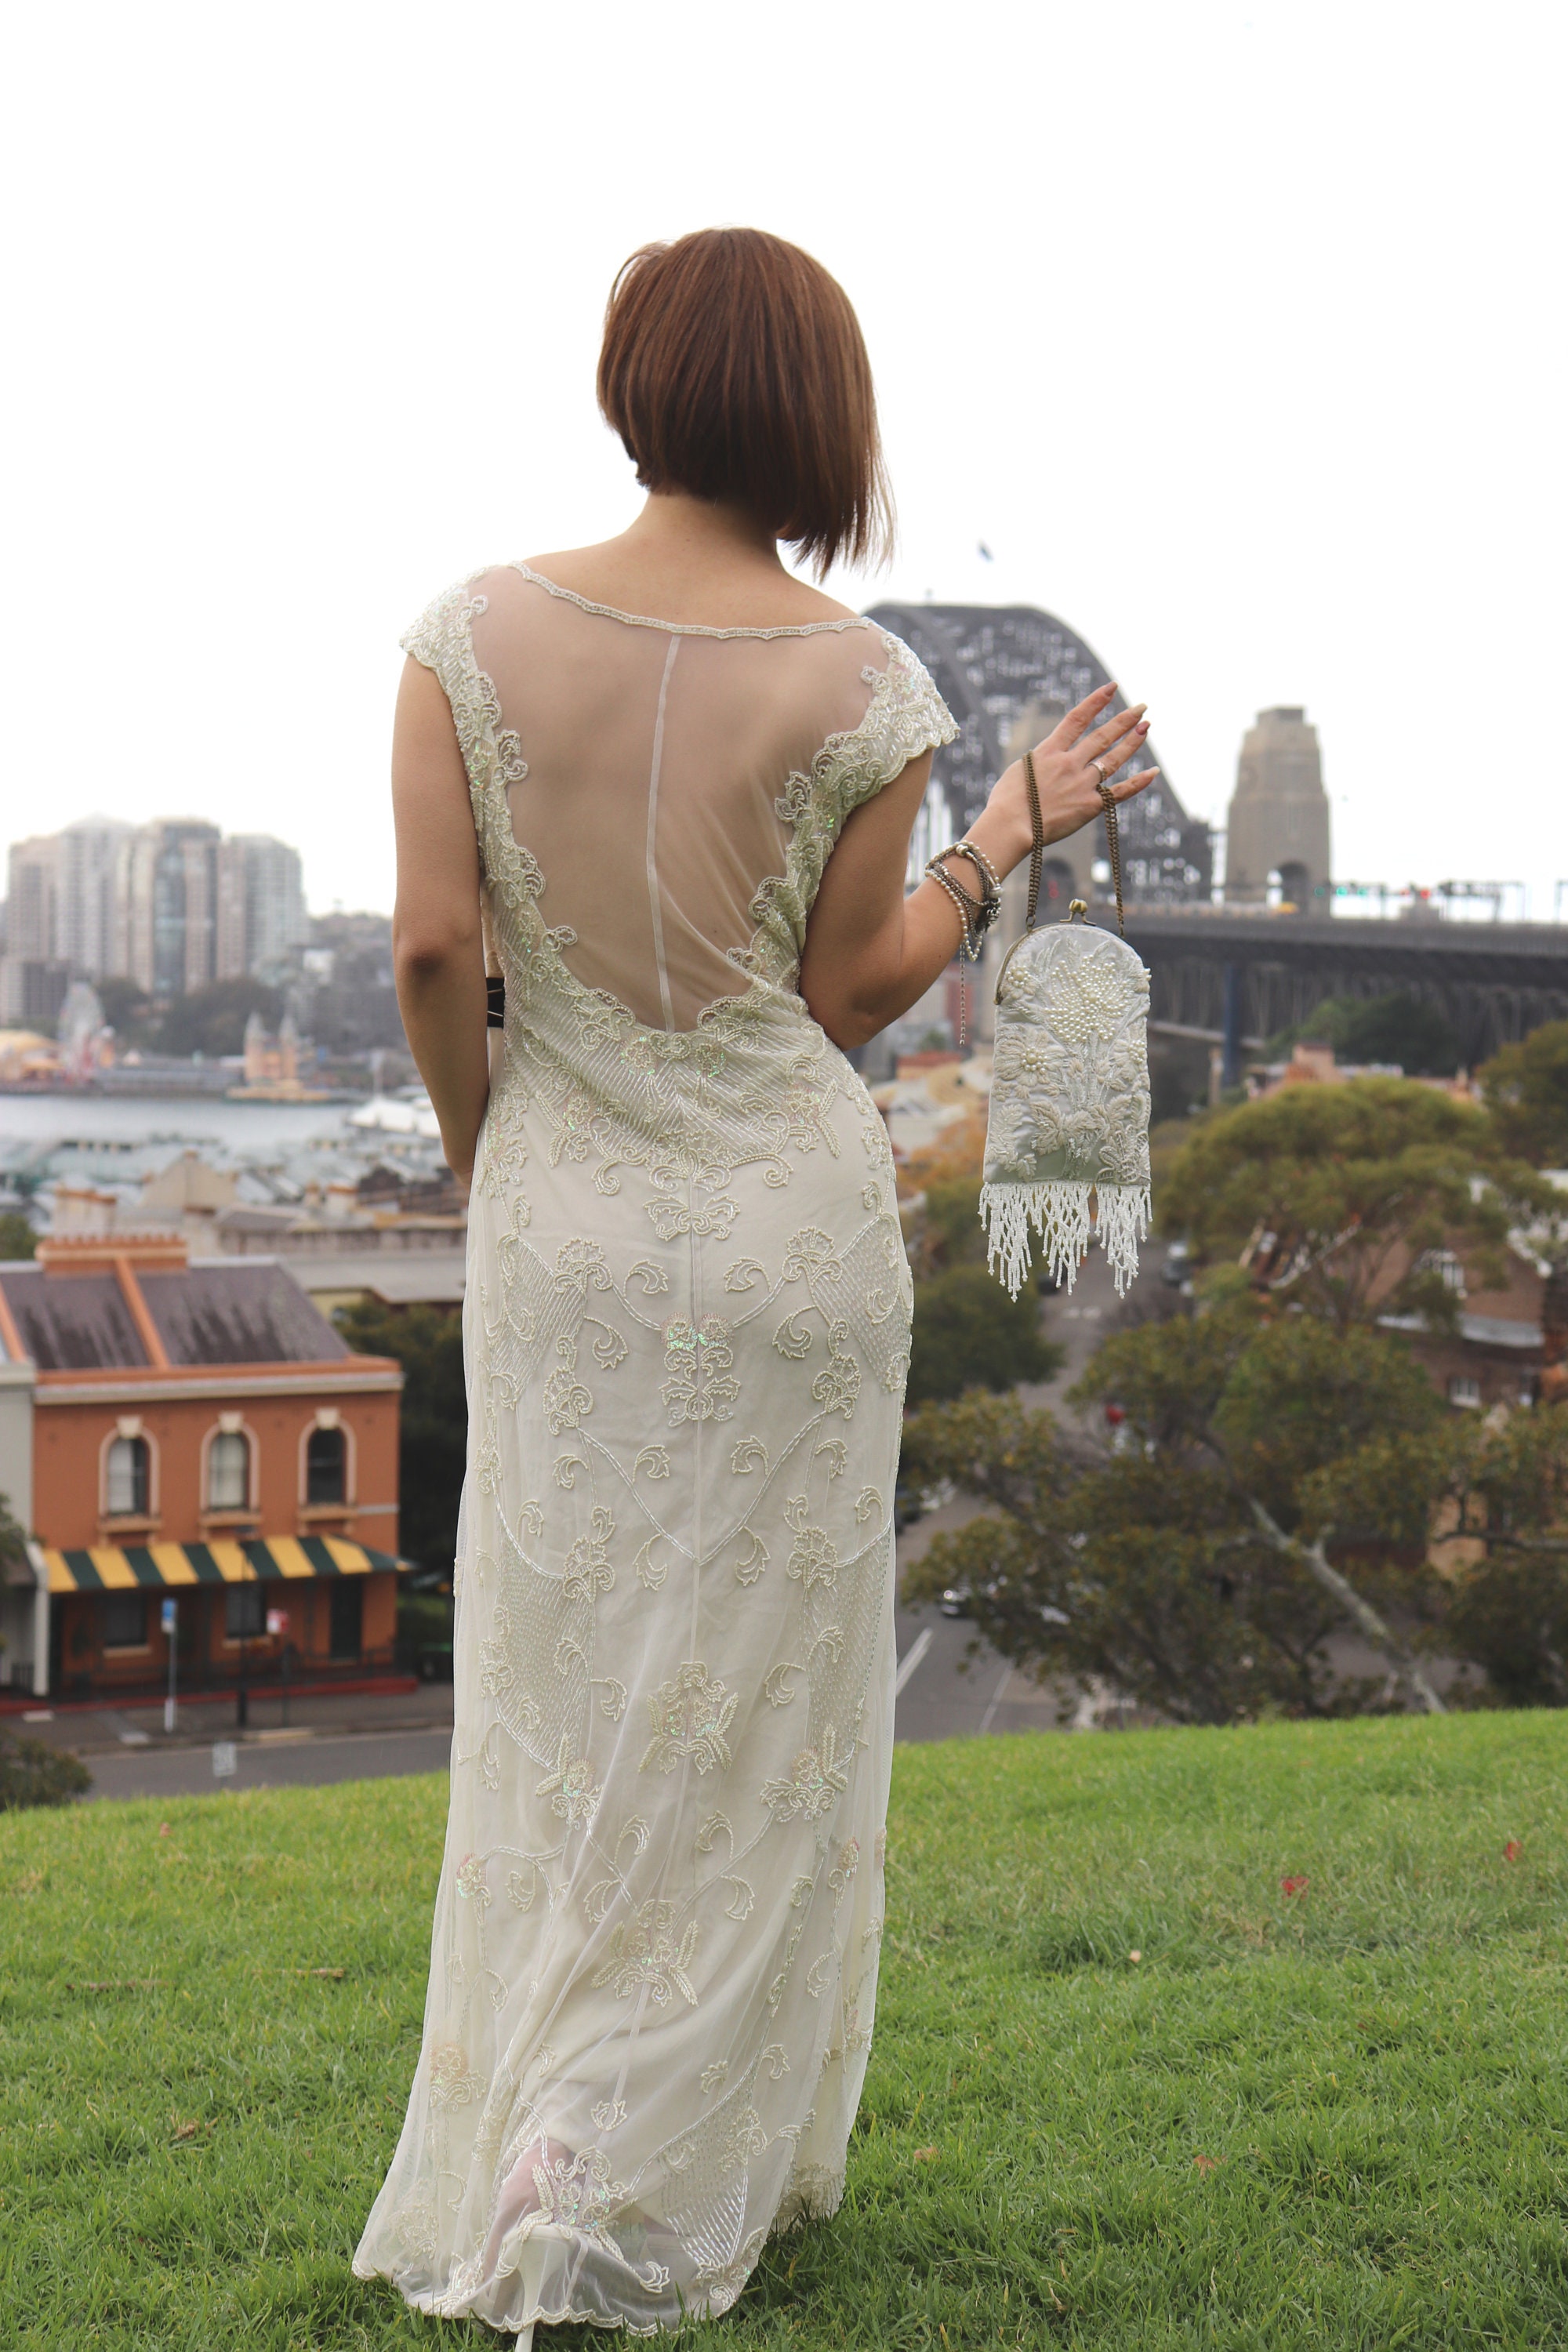 Pearl Beaded Clutch Purse Bag Bridal Wedding Vintage 50s Made in Japan  Ivory Satin Lining Zip Closure